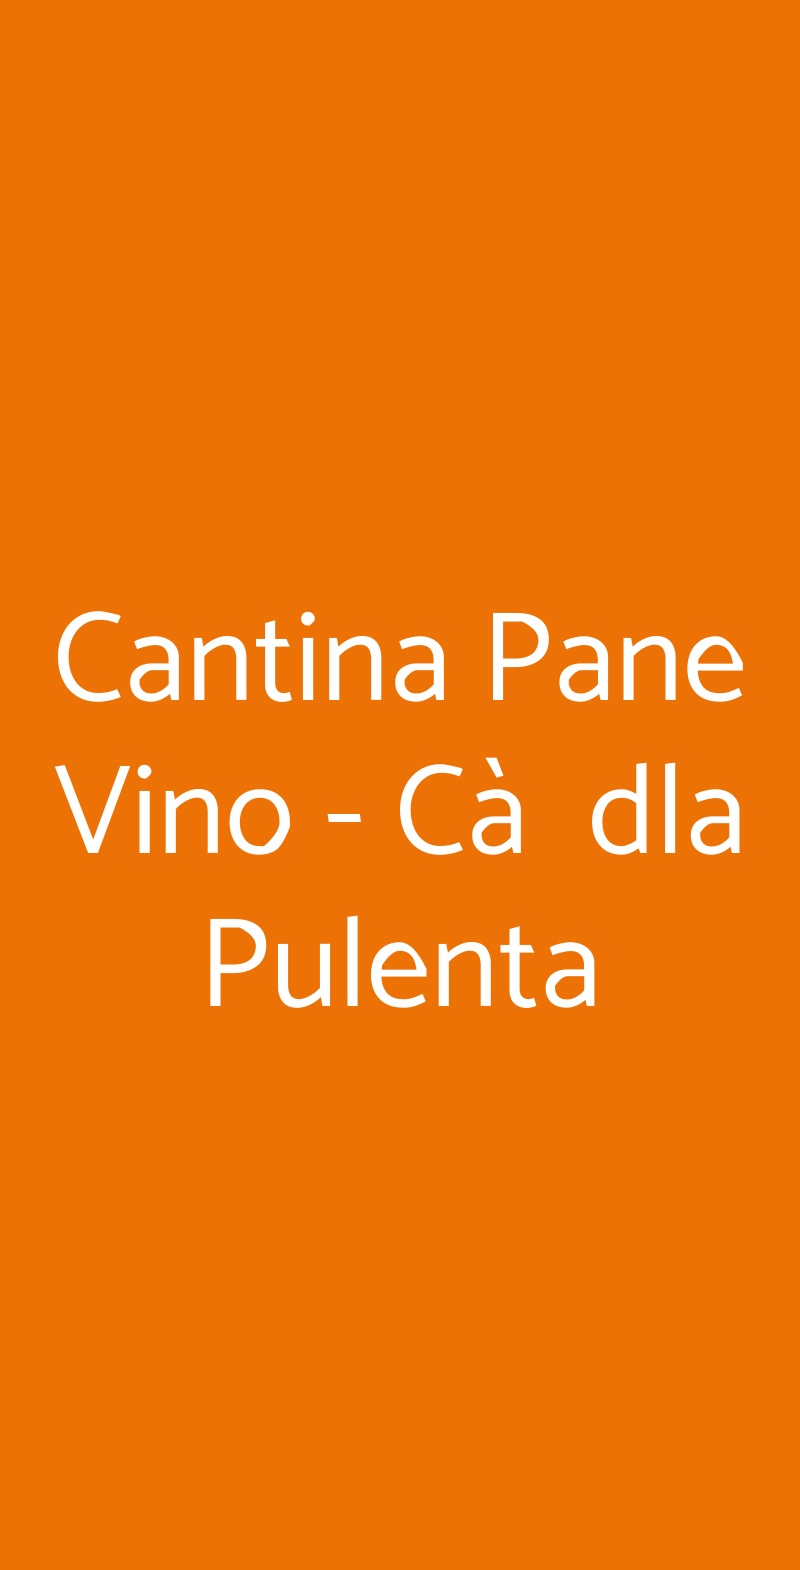 Cantina Pane Vino - Cà  dla Pulenta Roppolo menù 1 pagina